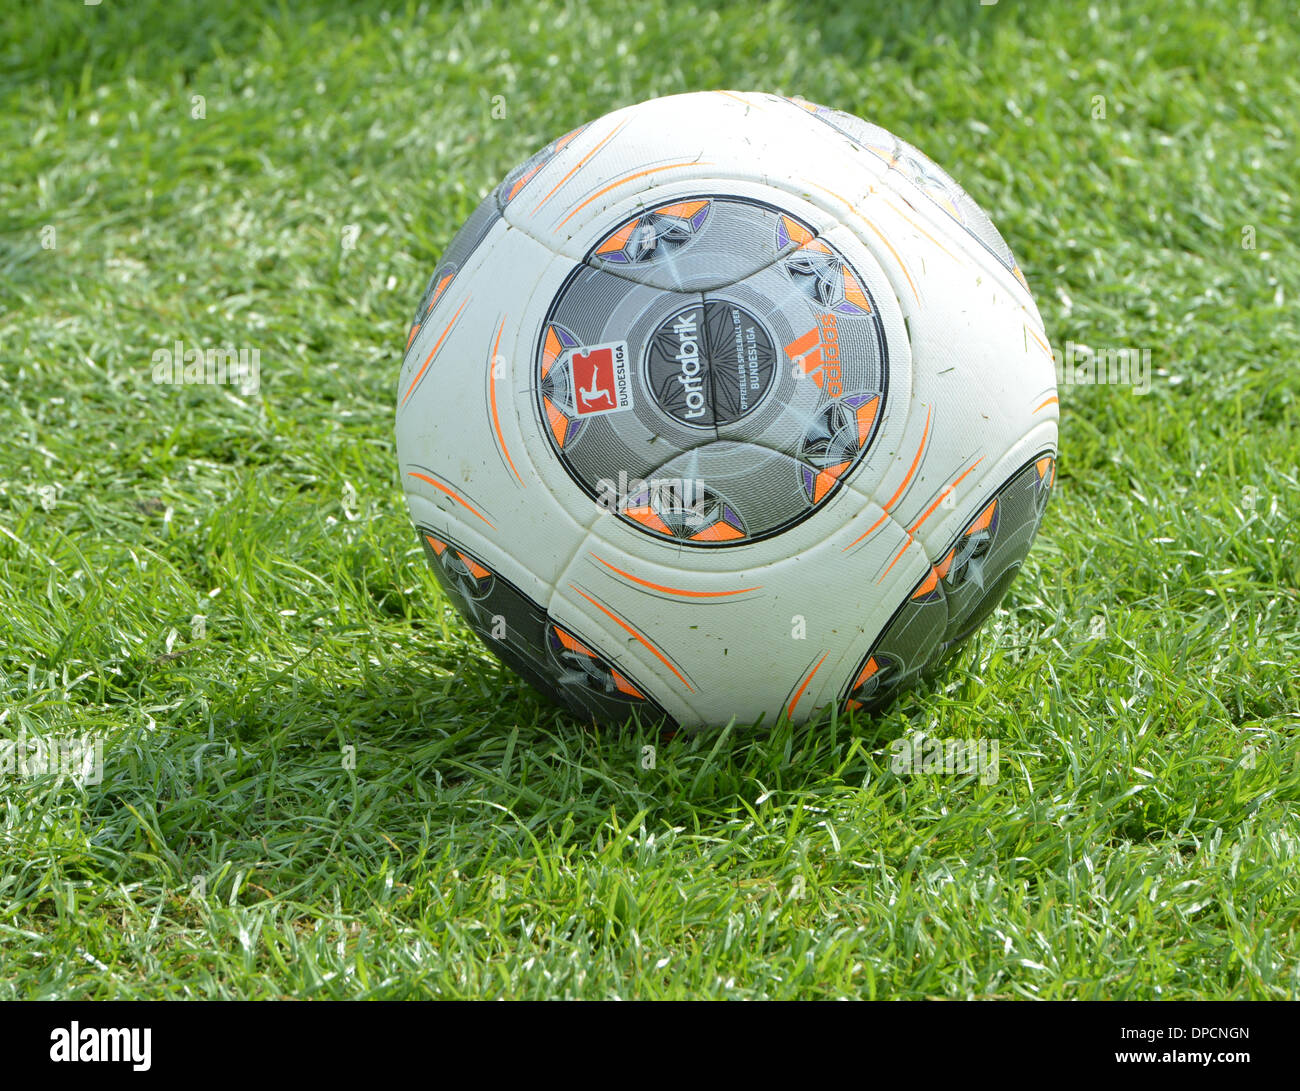 Doha, Qatar. 12th Jan, 2014. The Adidas soccer ball 'torfrabrik' lies on  the pitch during a training session of FC Bayern Munich in Doha, Qatar, 12  January 2014. Photo: PETER KNEFFEL/dpa/Alamy Live